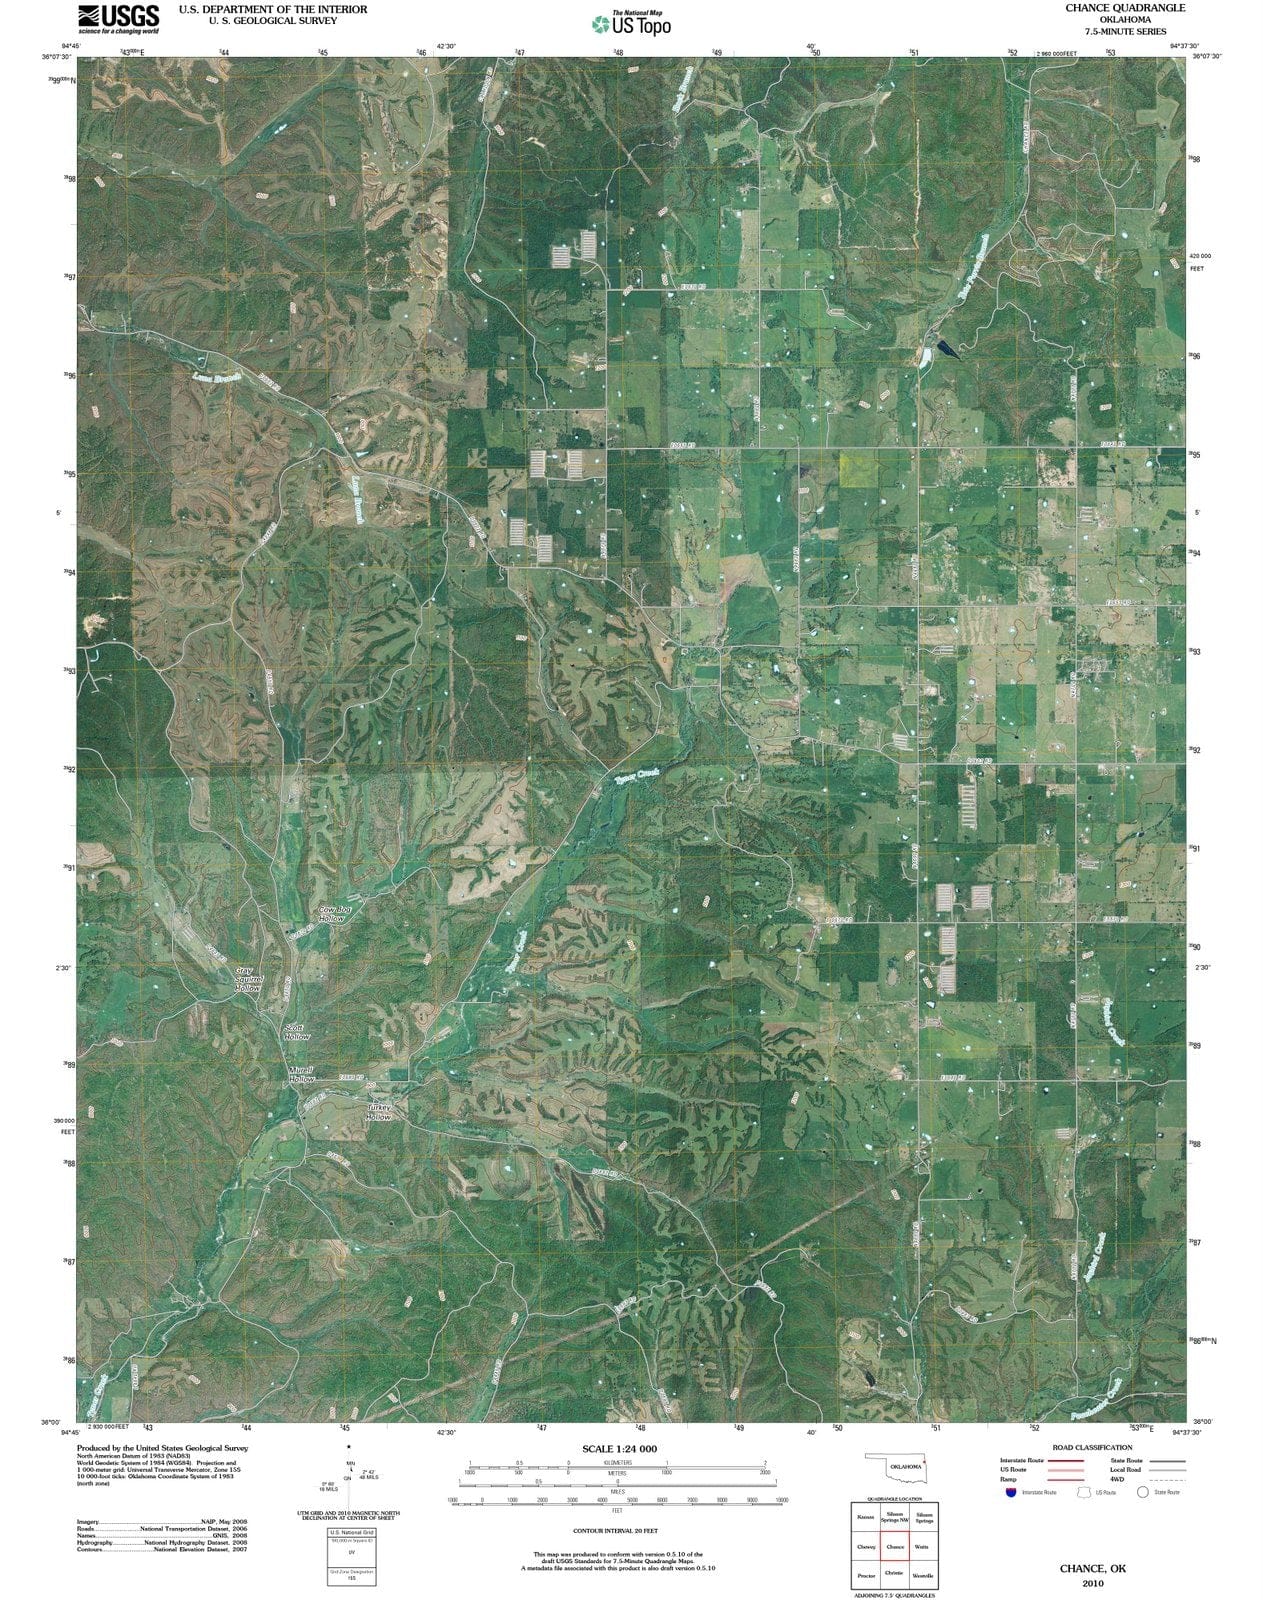 2010 Chance, OK - Oklahoma - USGS Topographic Map